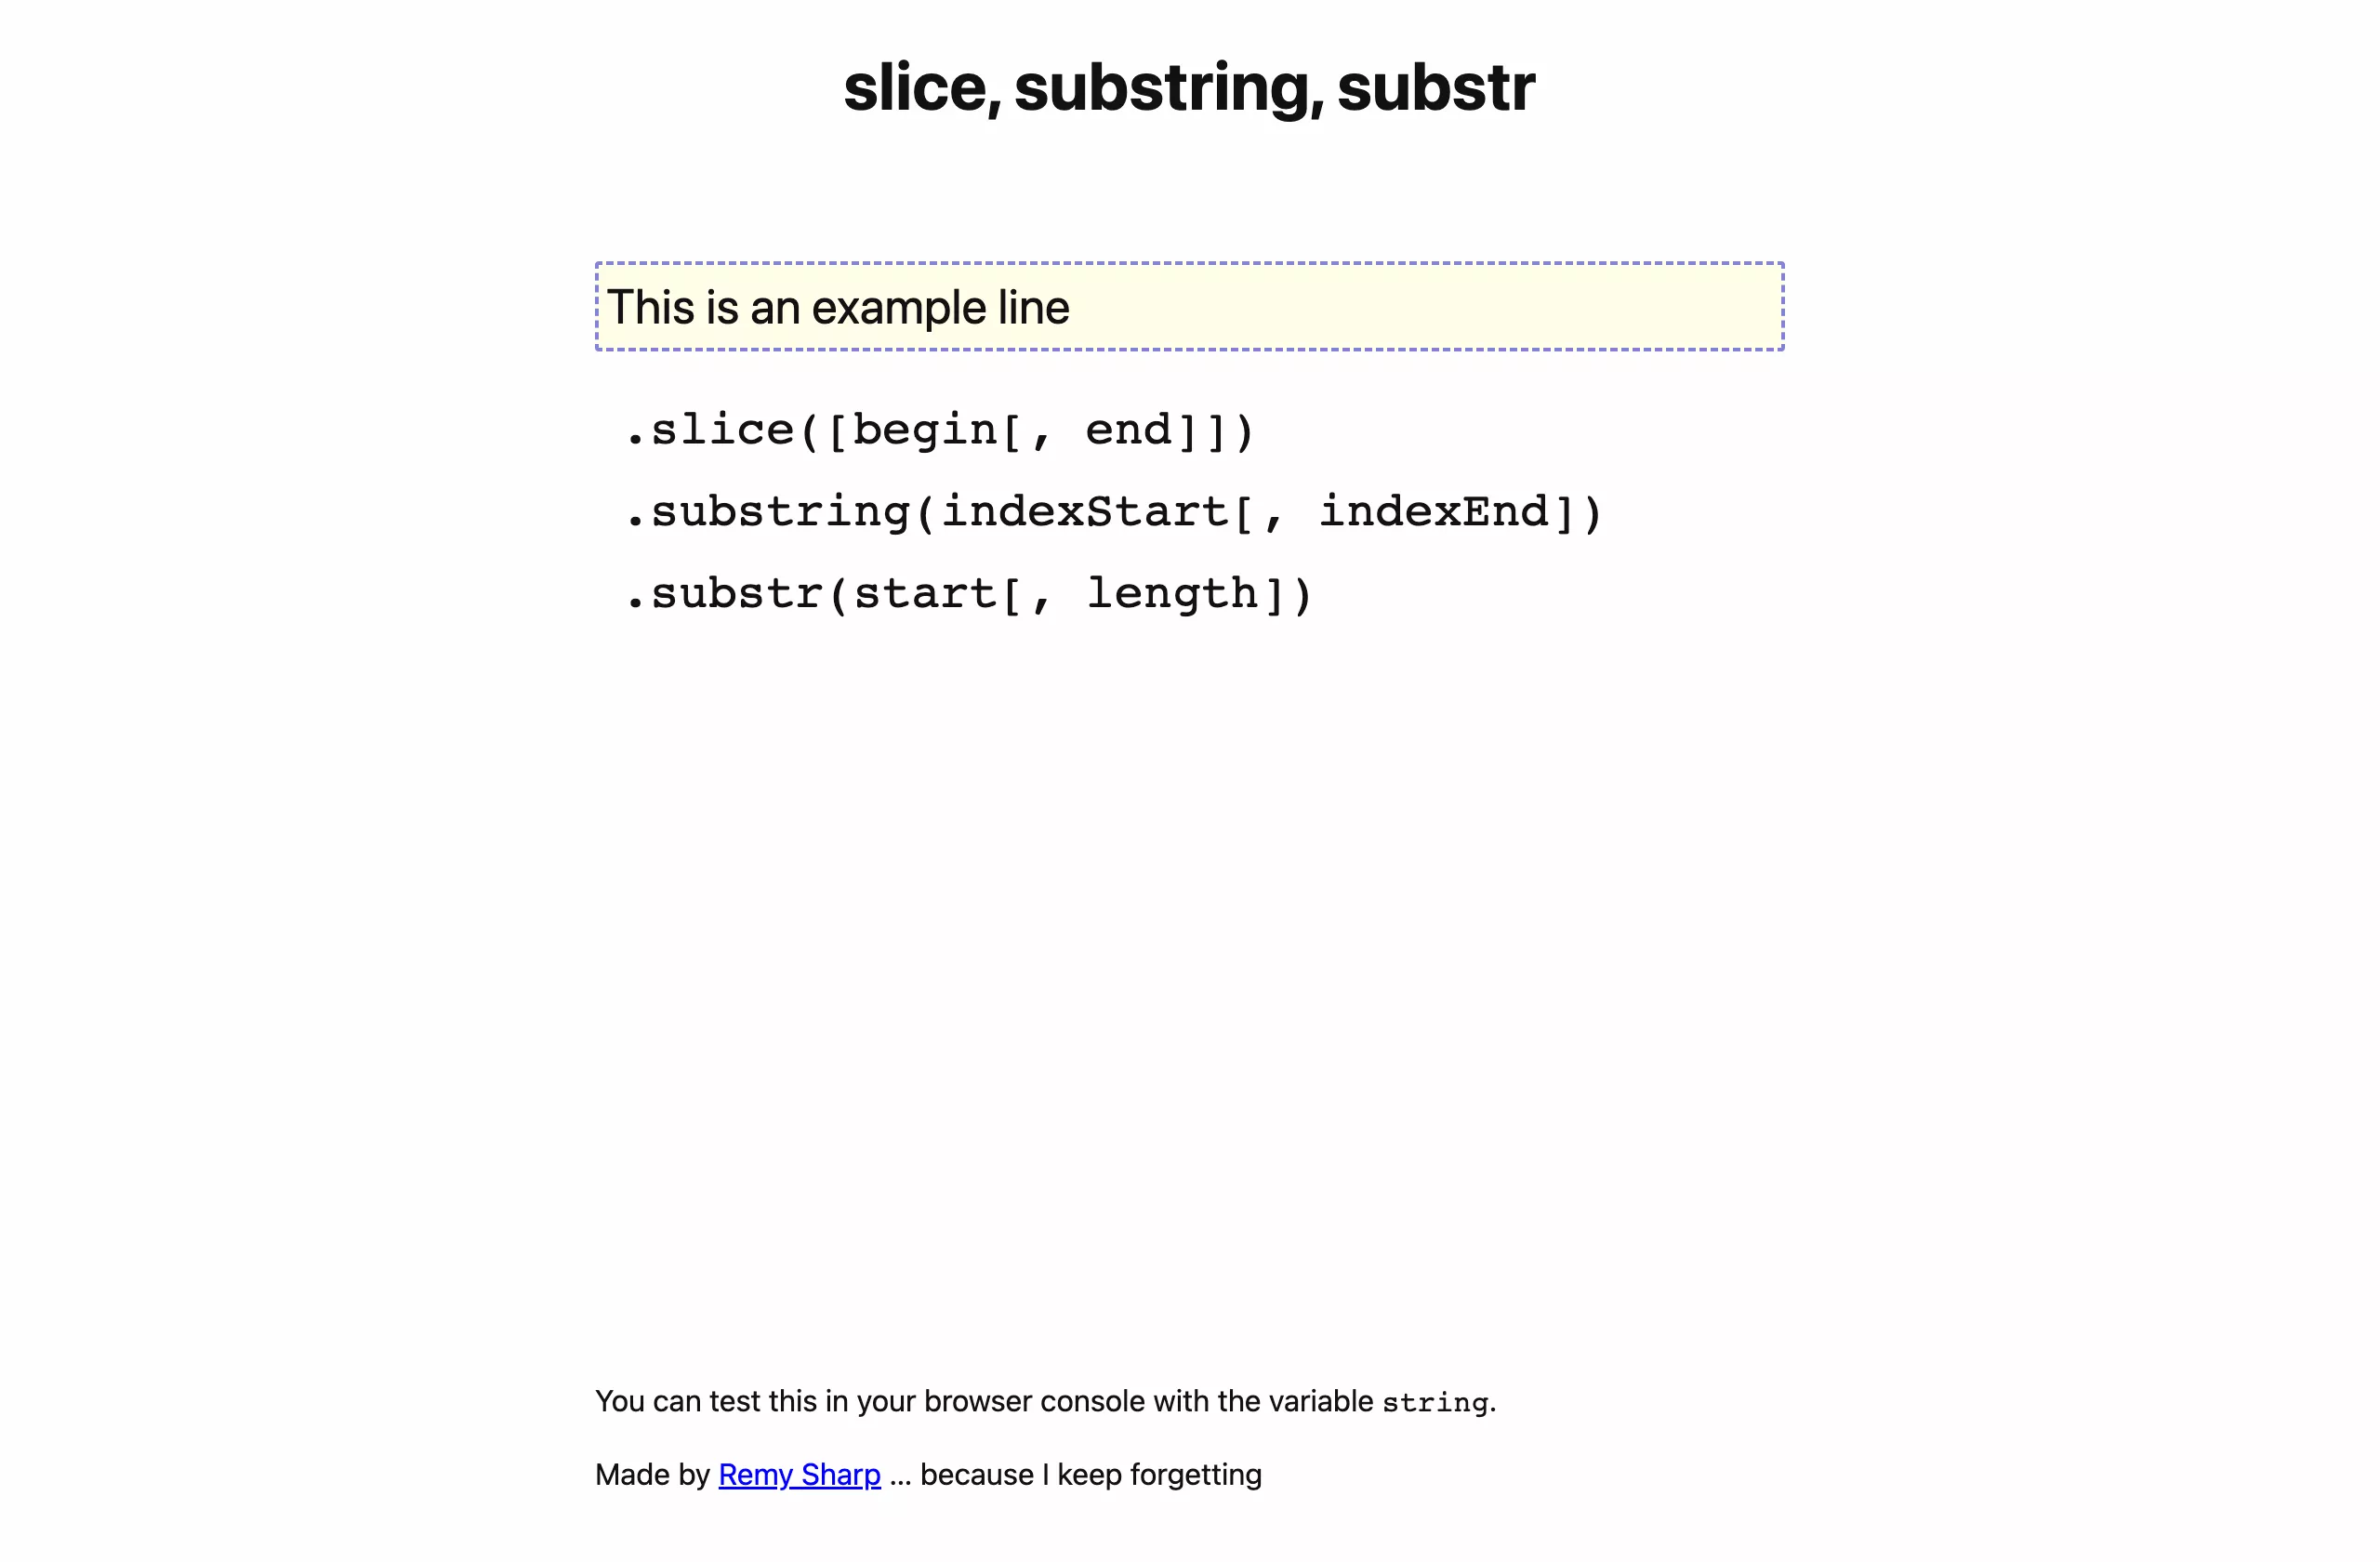 slice, substring, substr comparison